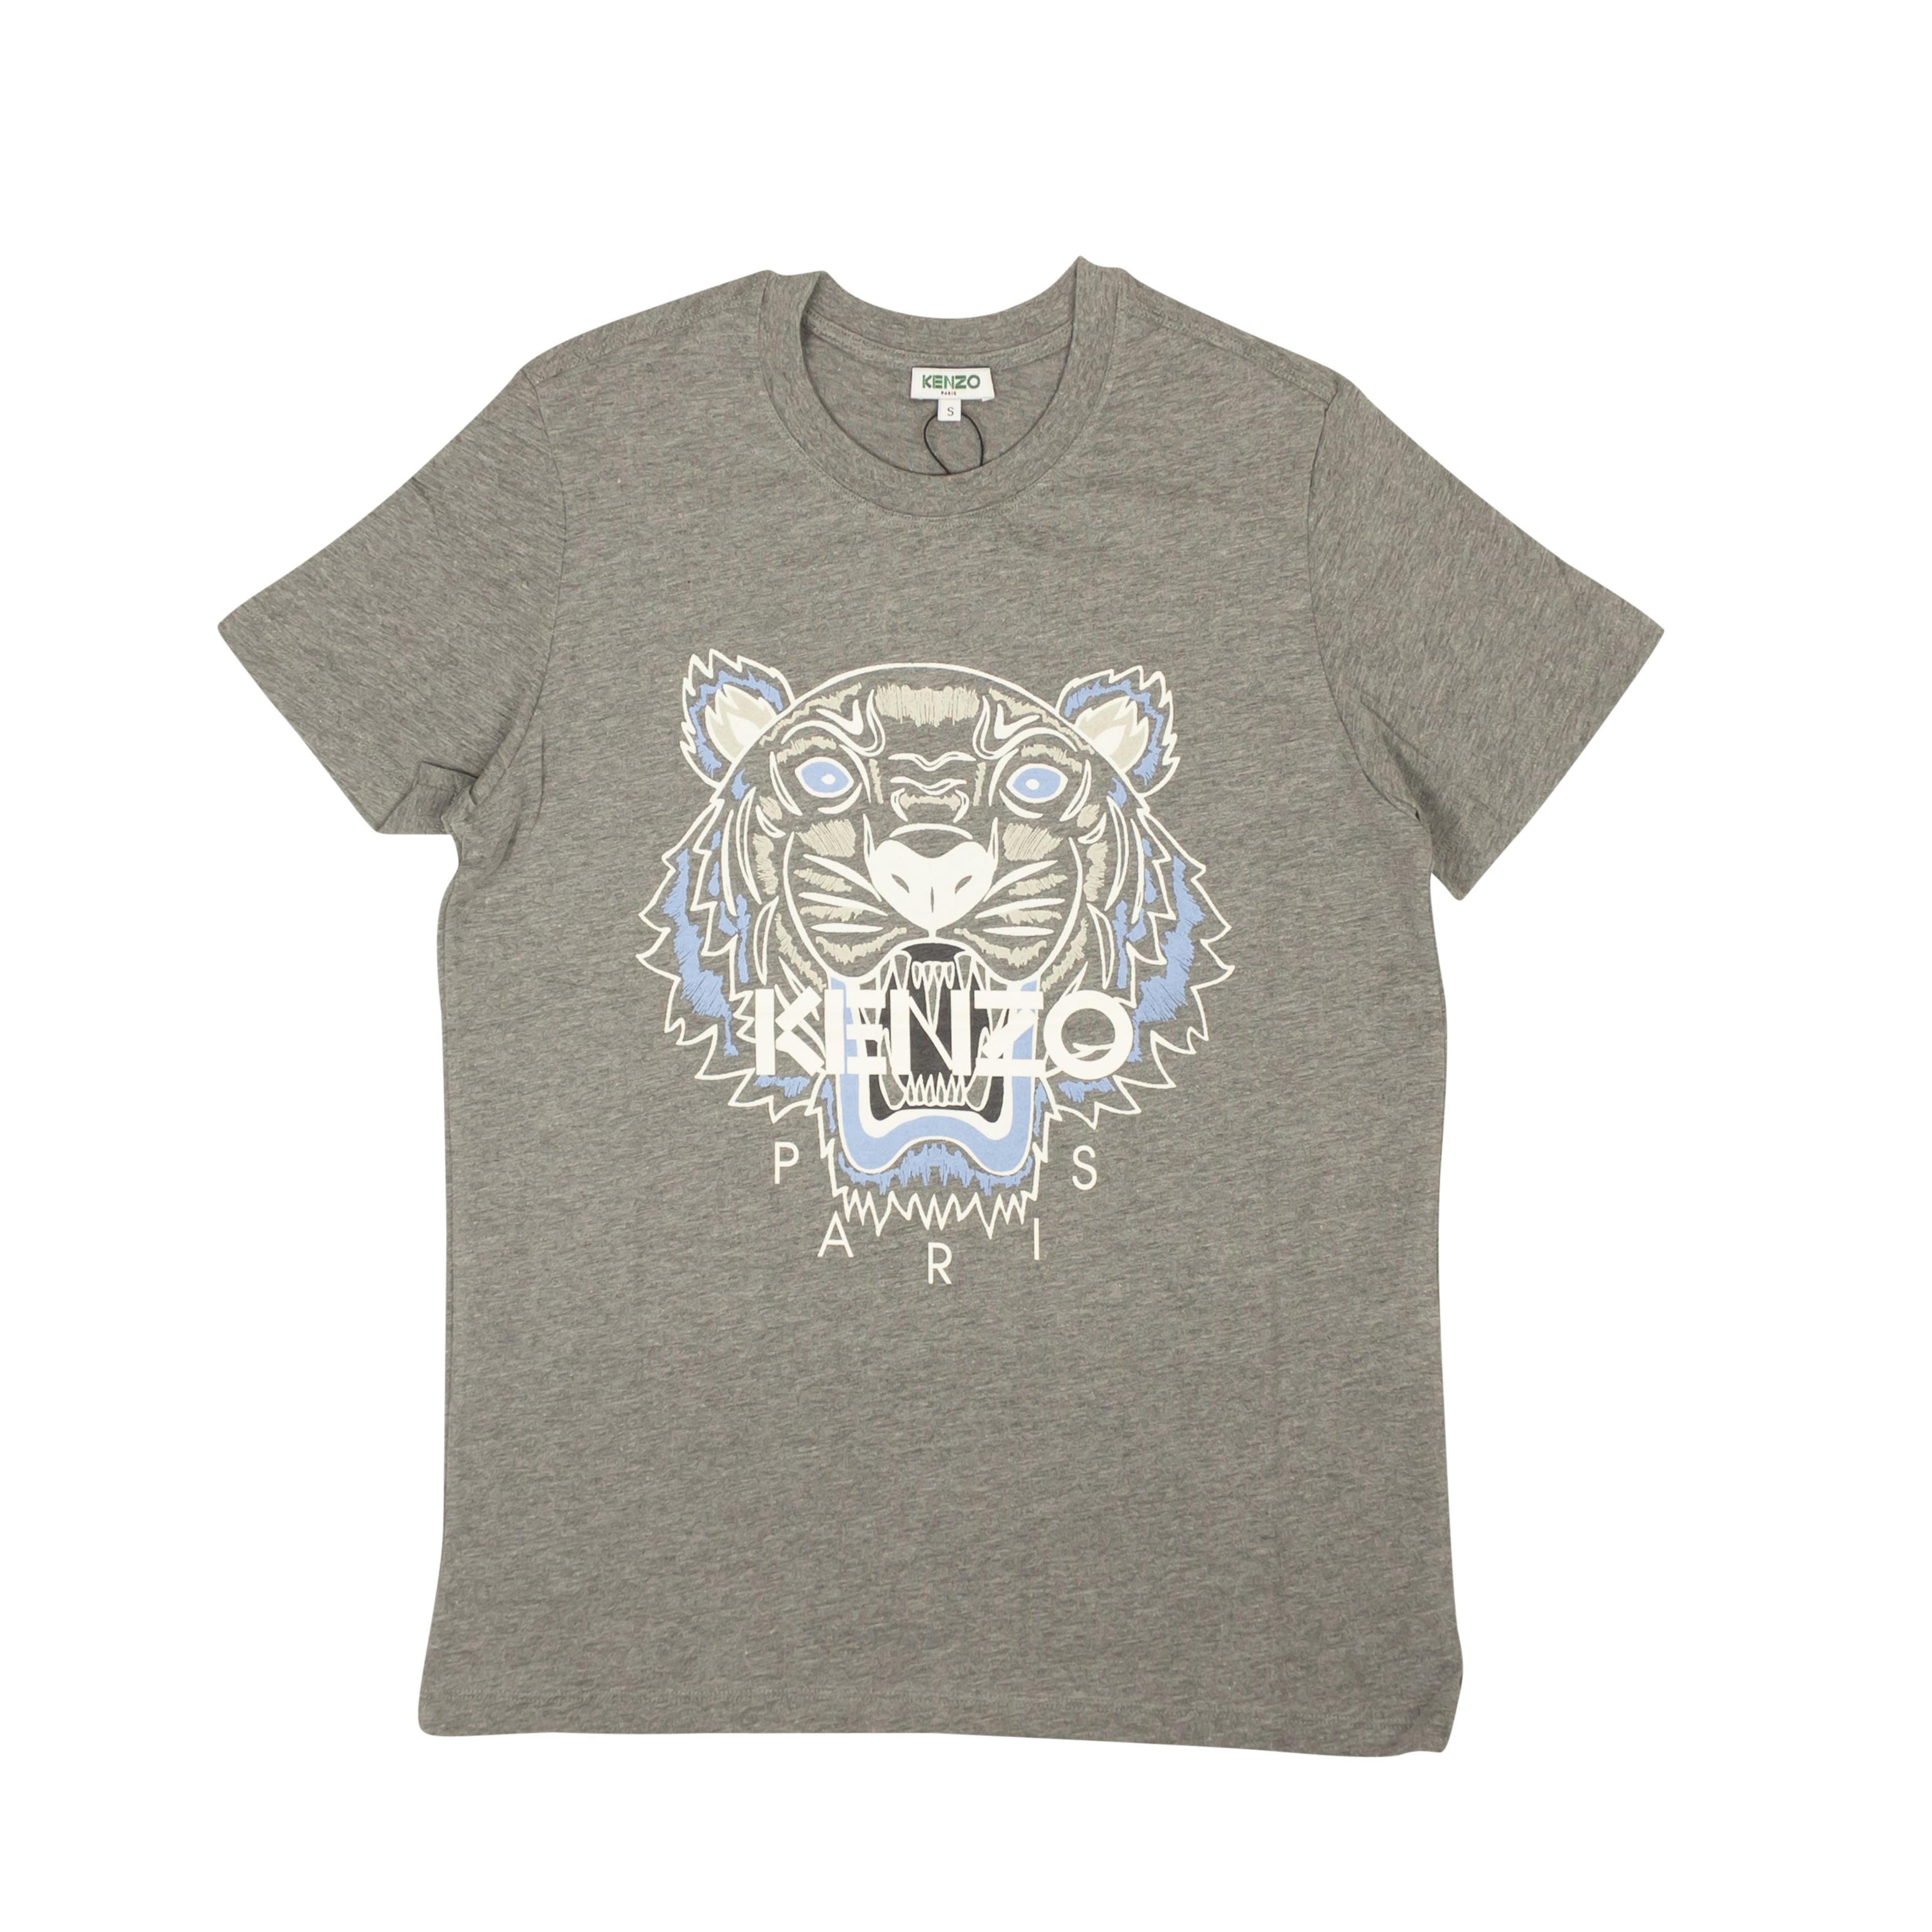 Kenzo Classic Tiger T-Shirt - Gray